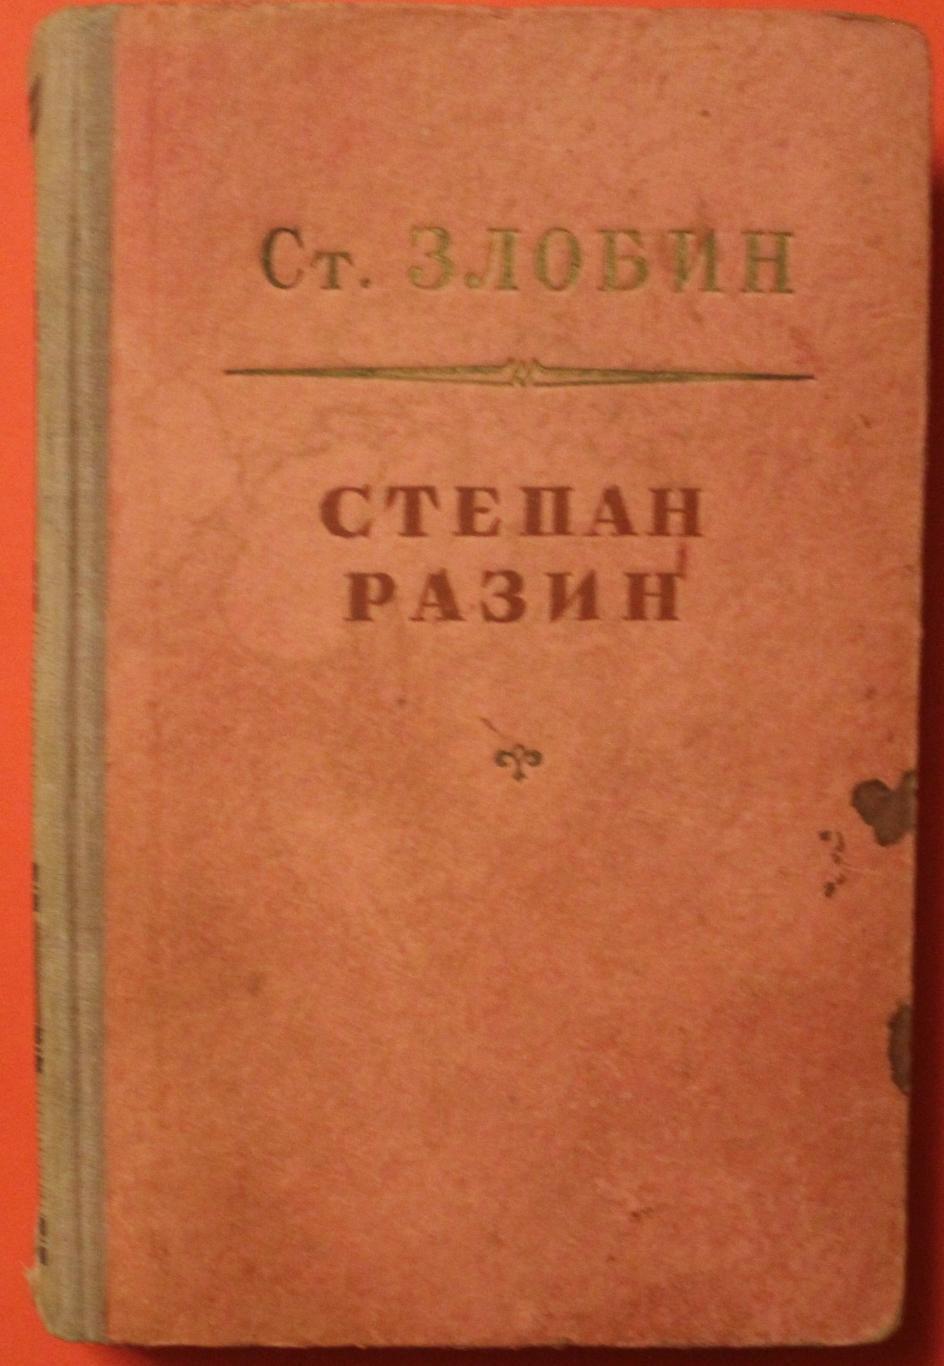 Степан Злобин Степан Разин в двух томах изд. 1952 3